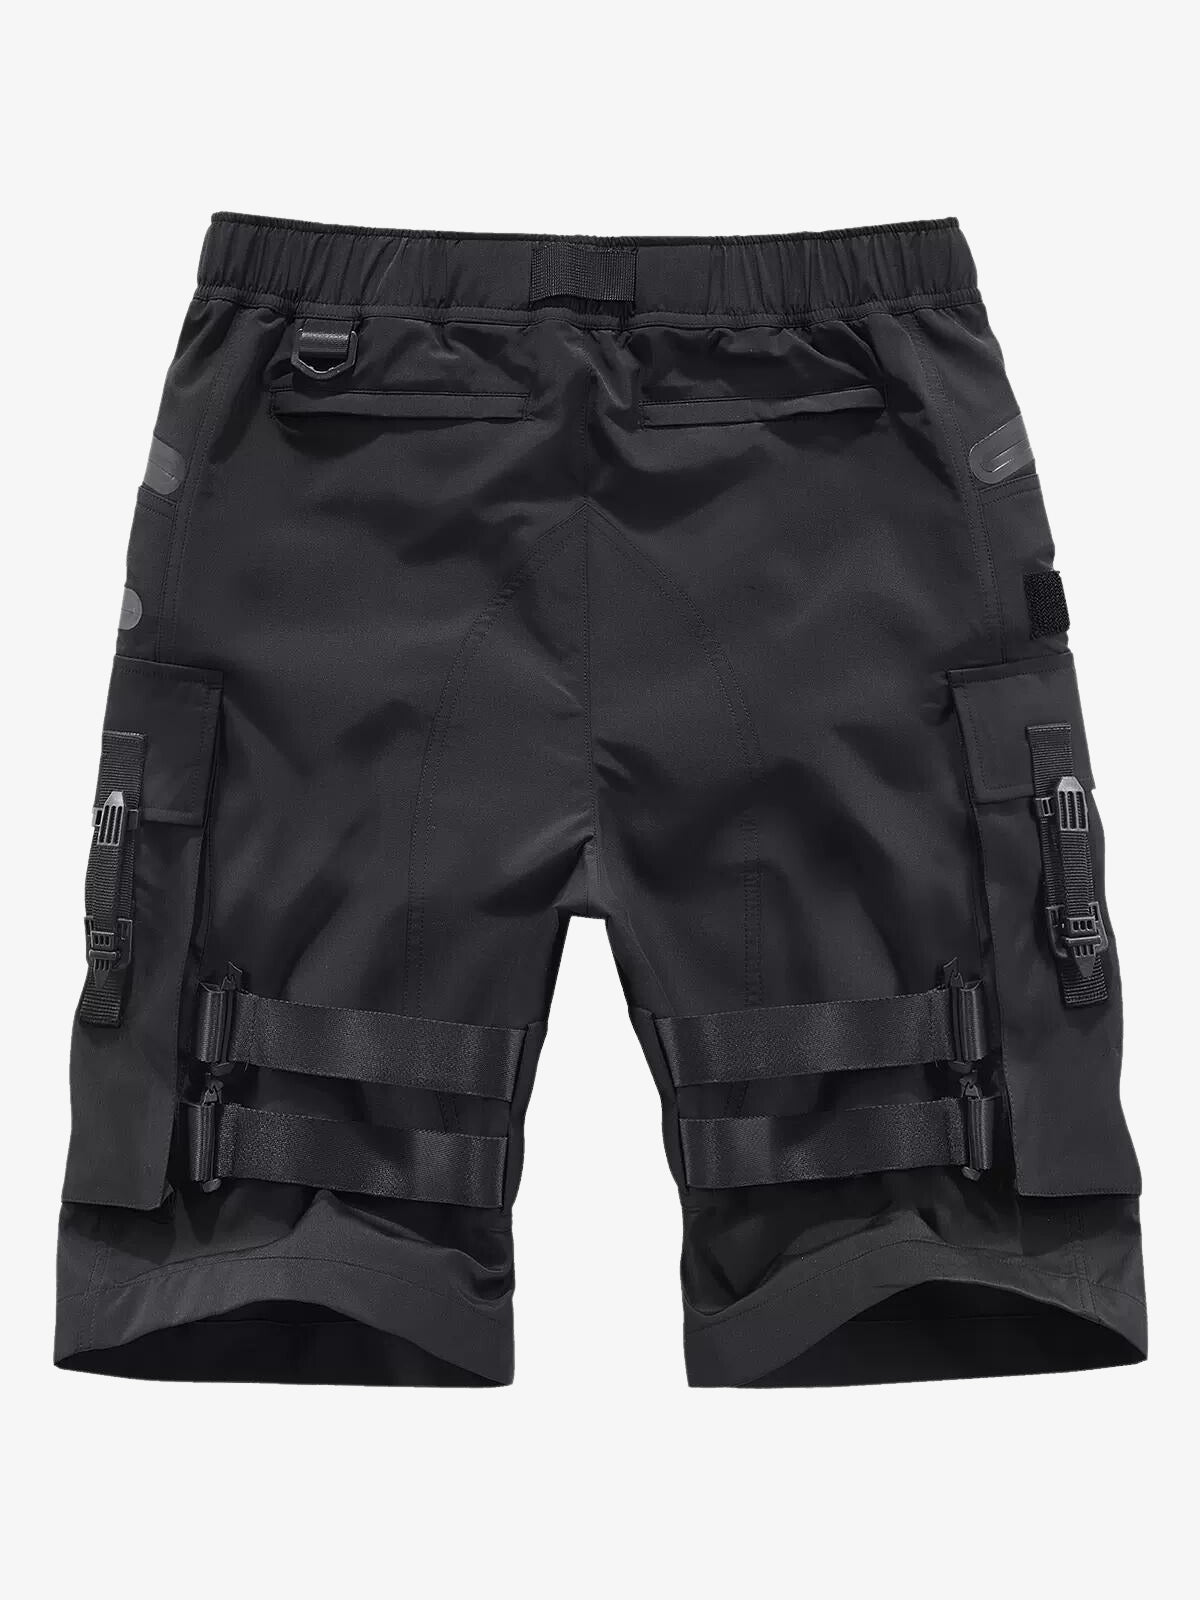 Men's Multi Pockets Futuristic Shorts